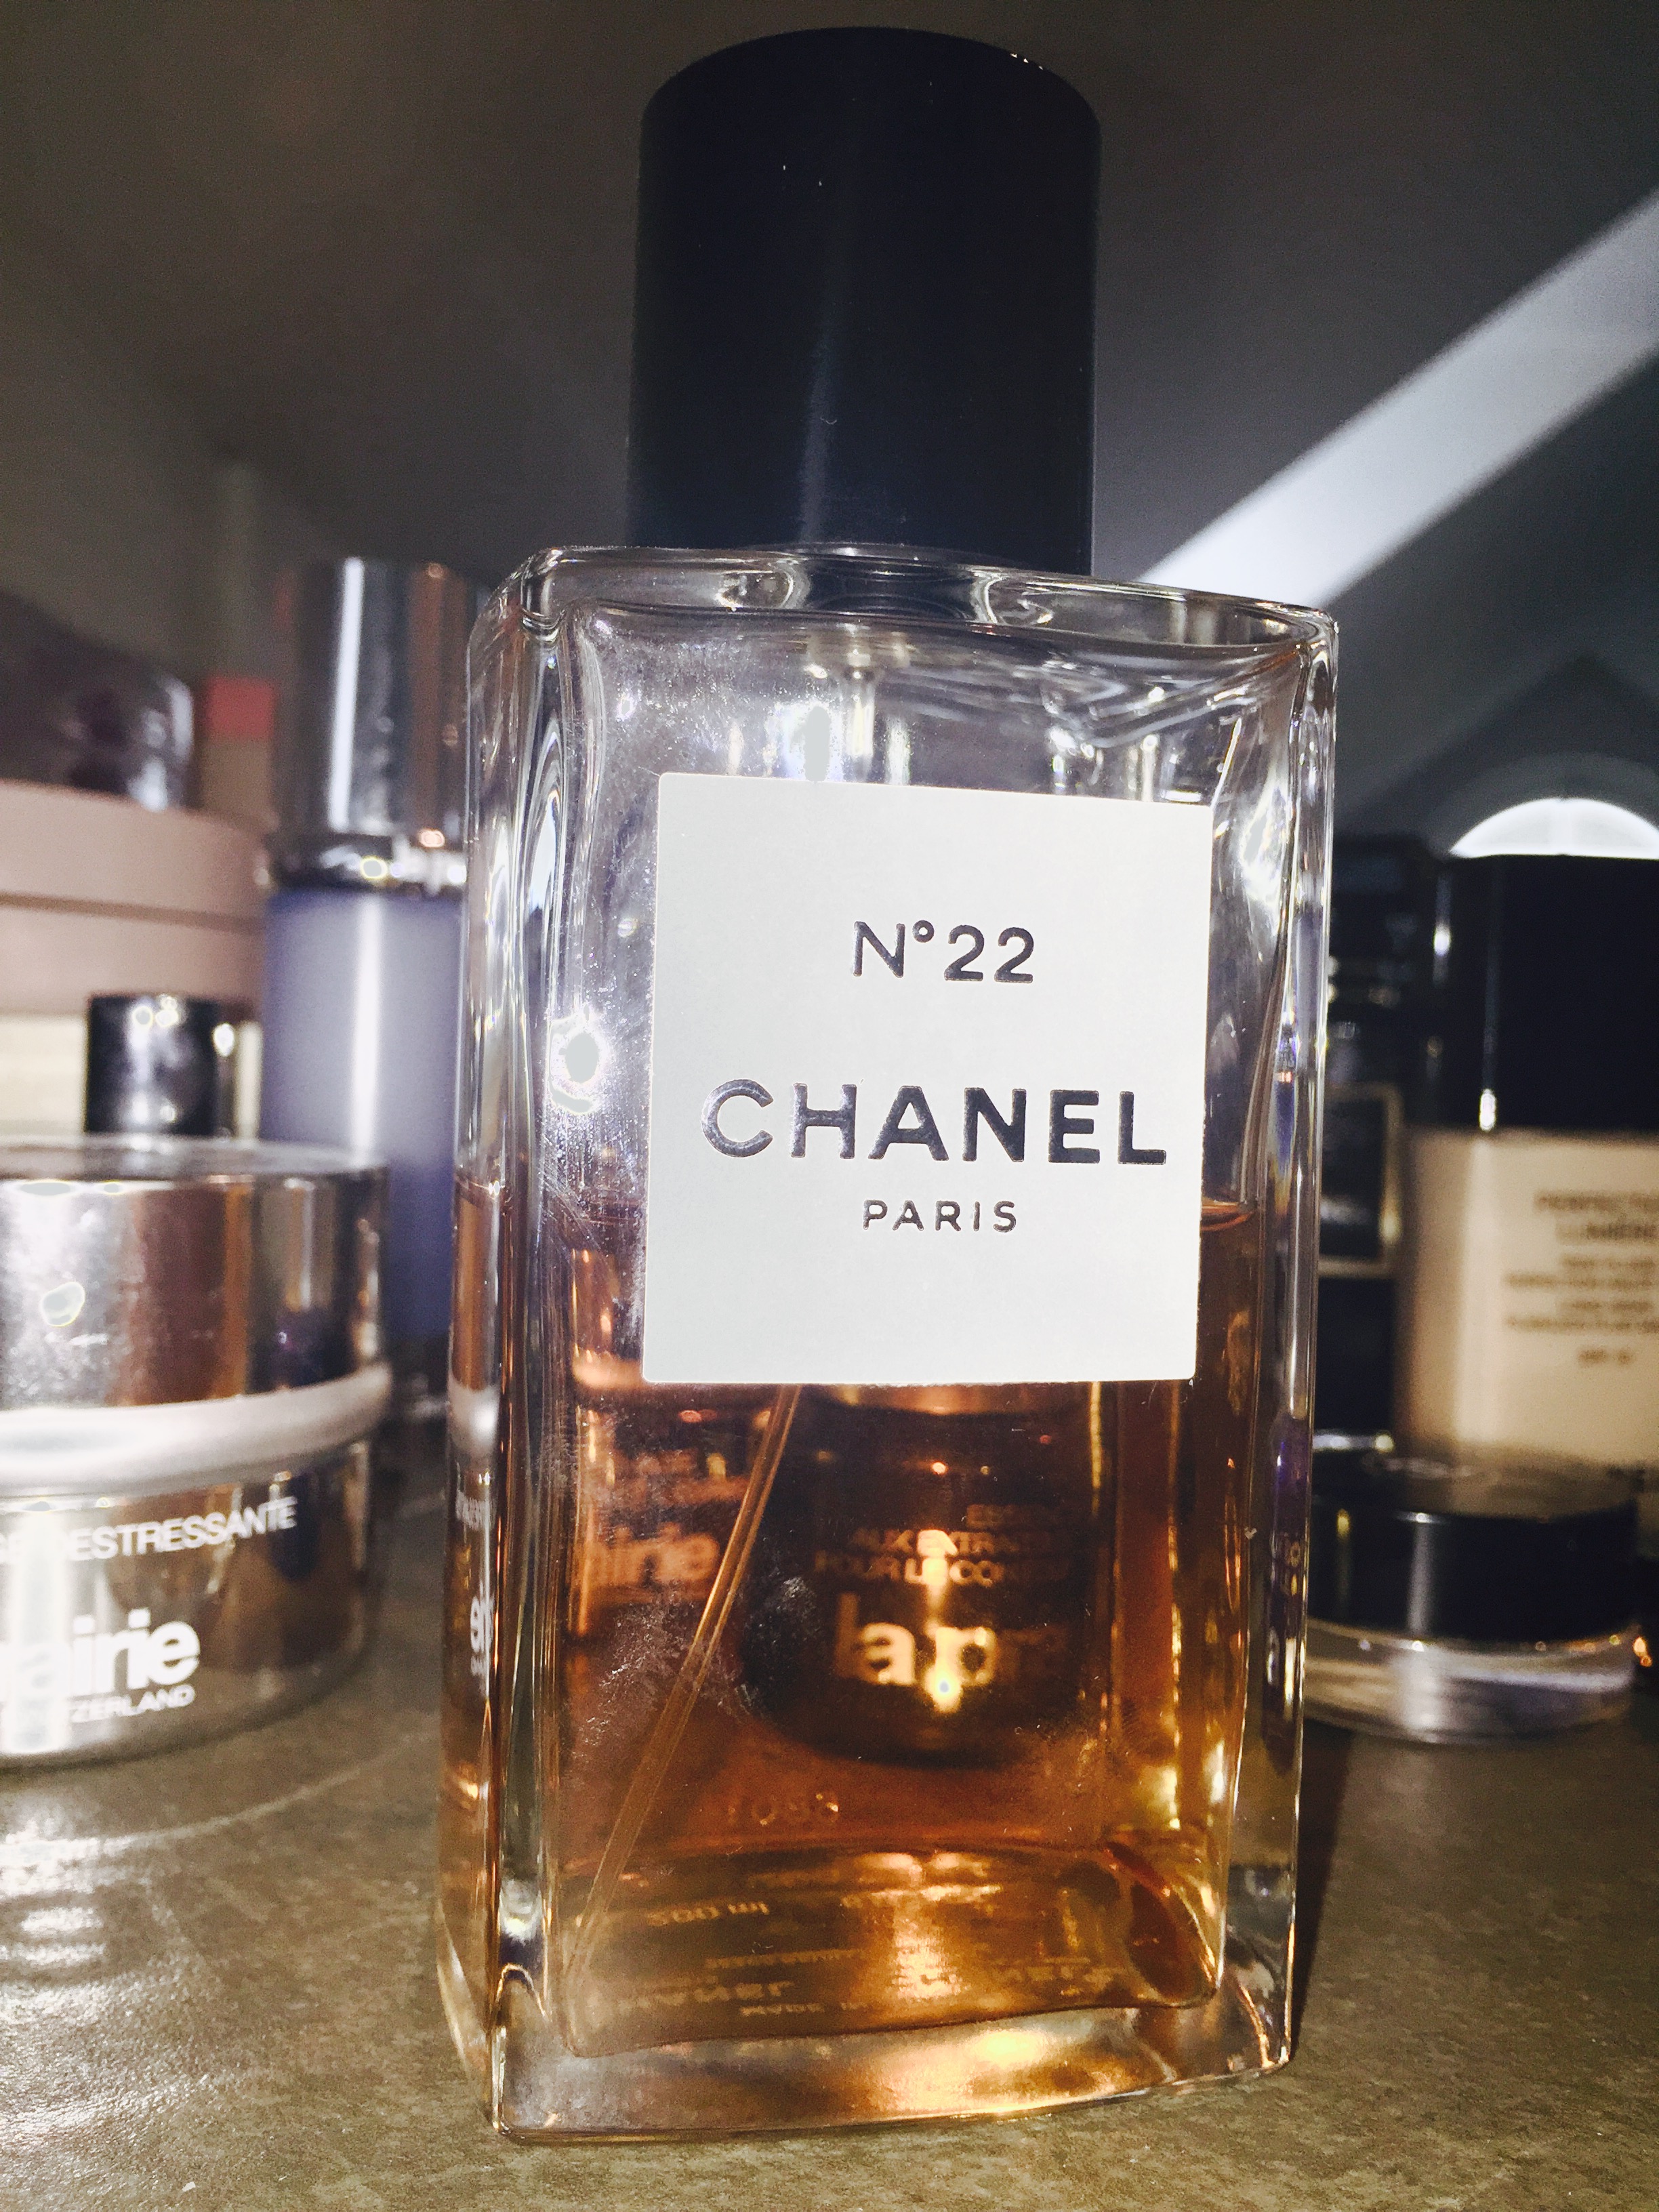 Les Exclusifs de Chanel Misia Chanel perfume - a fragrance for women 2015